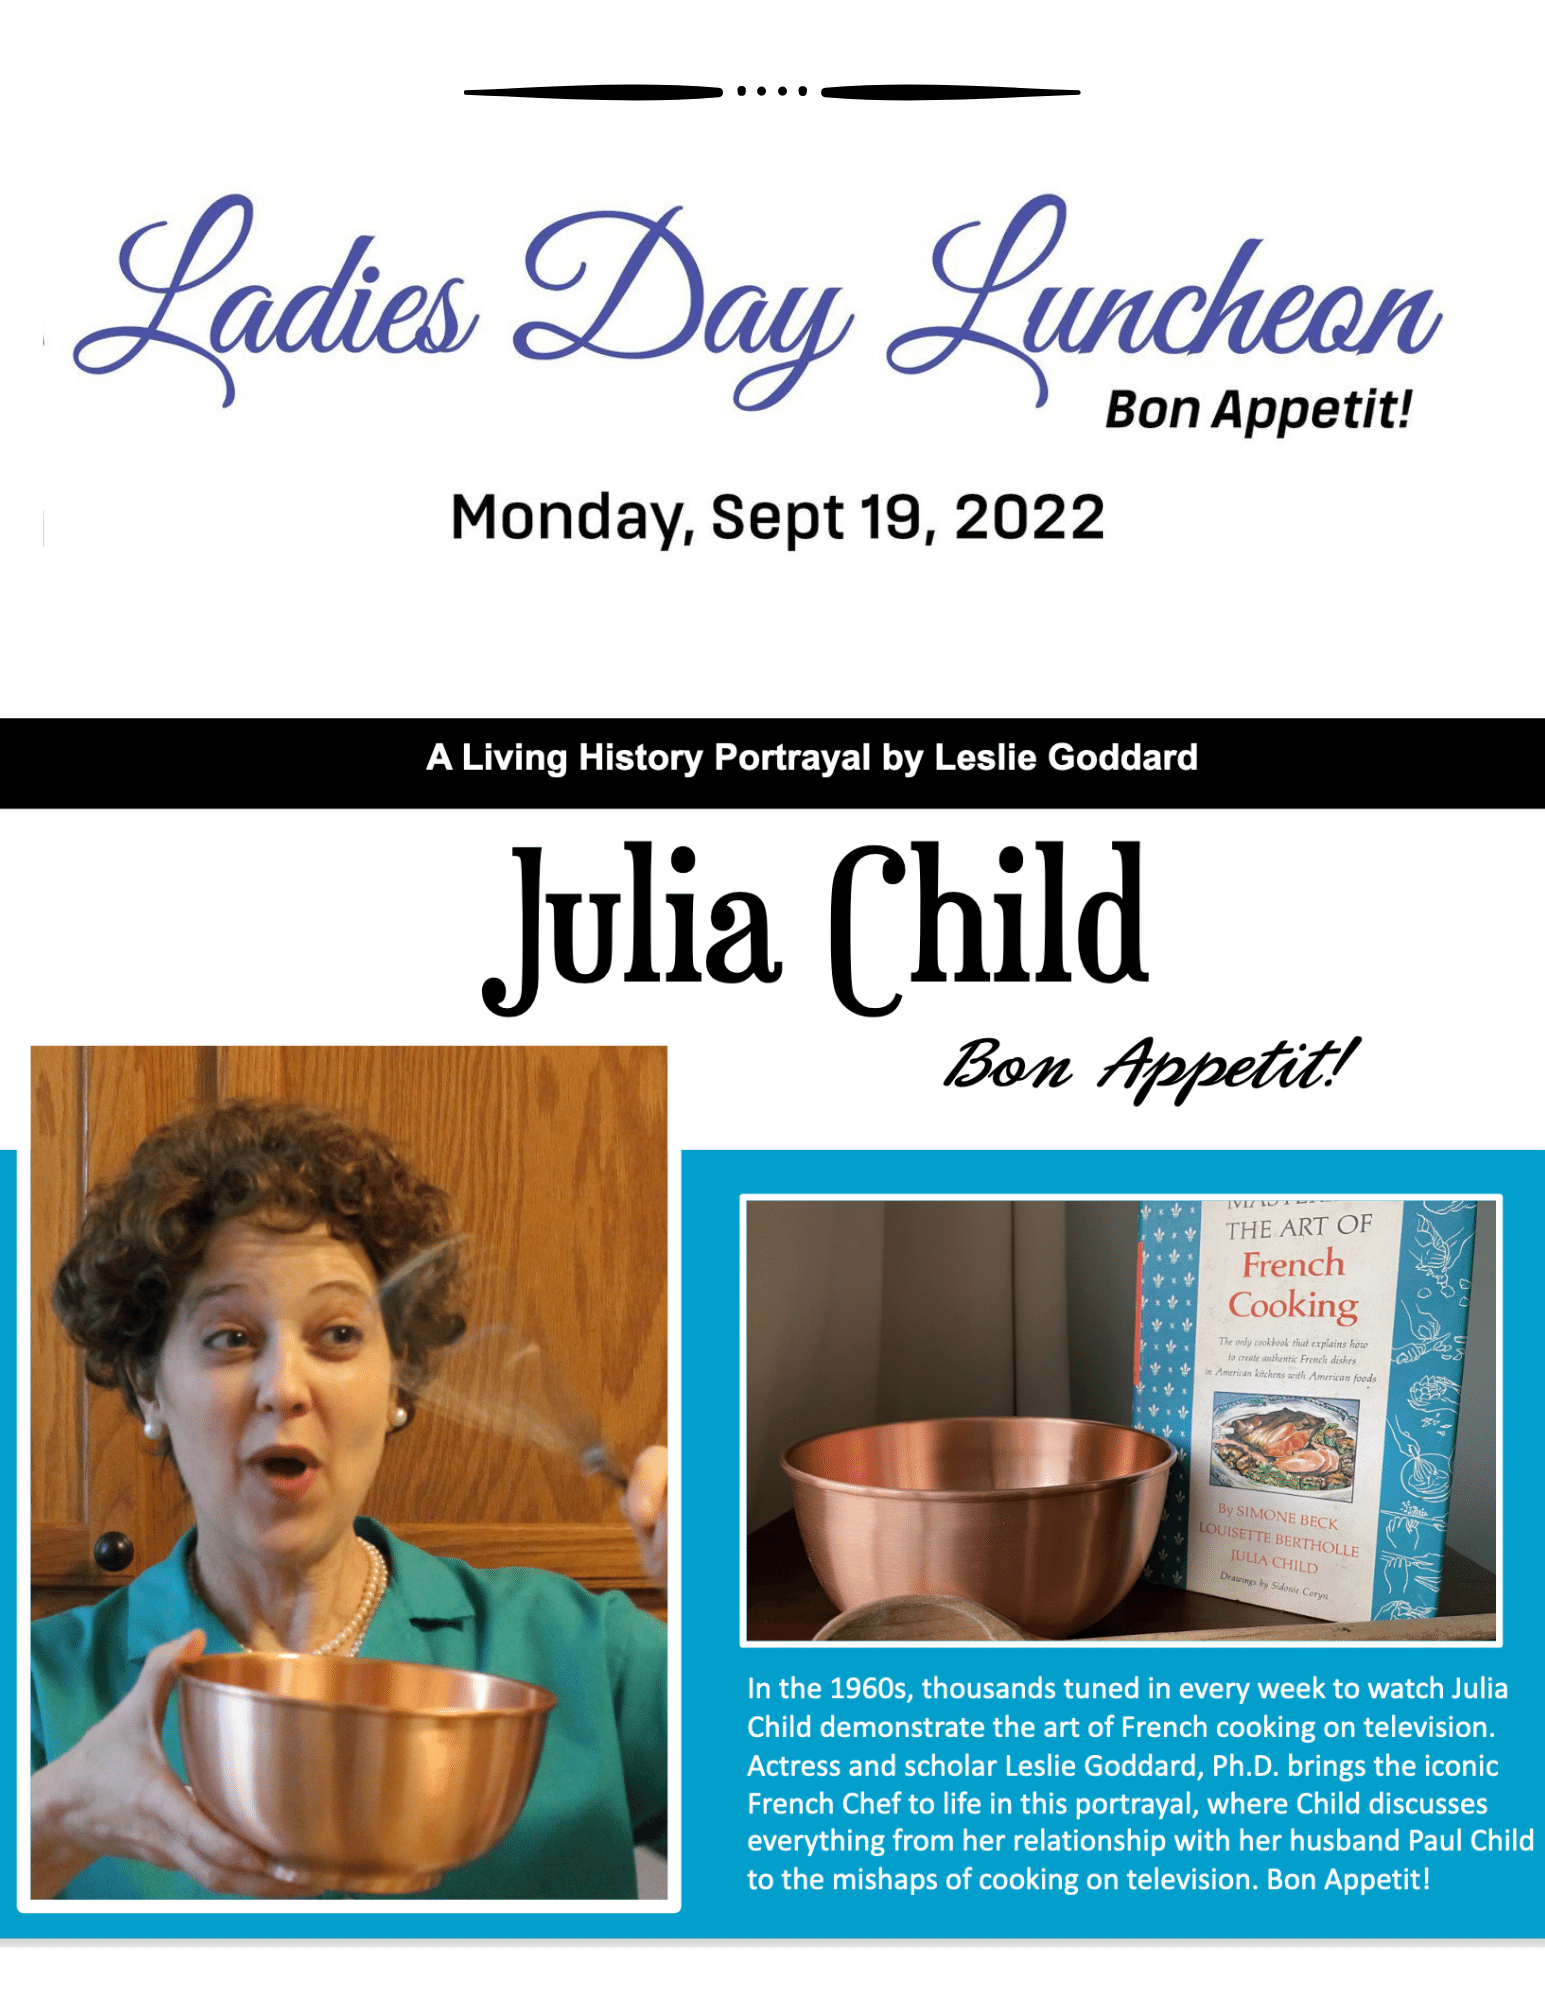 Ladies Day Luncheon - Julia Child, Bon Appetit!